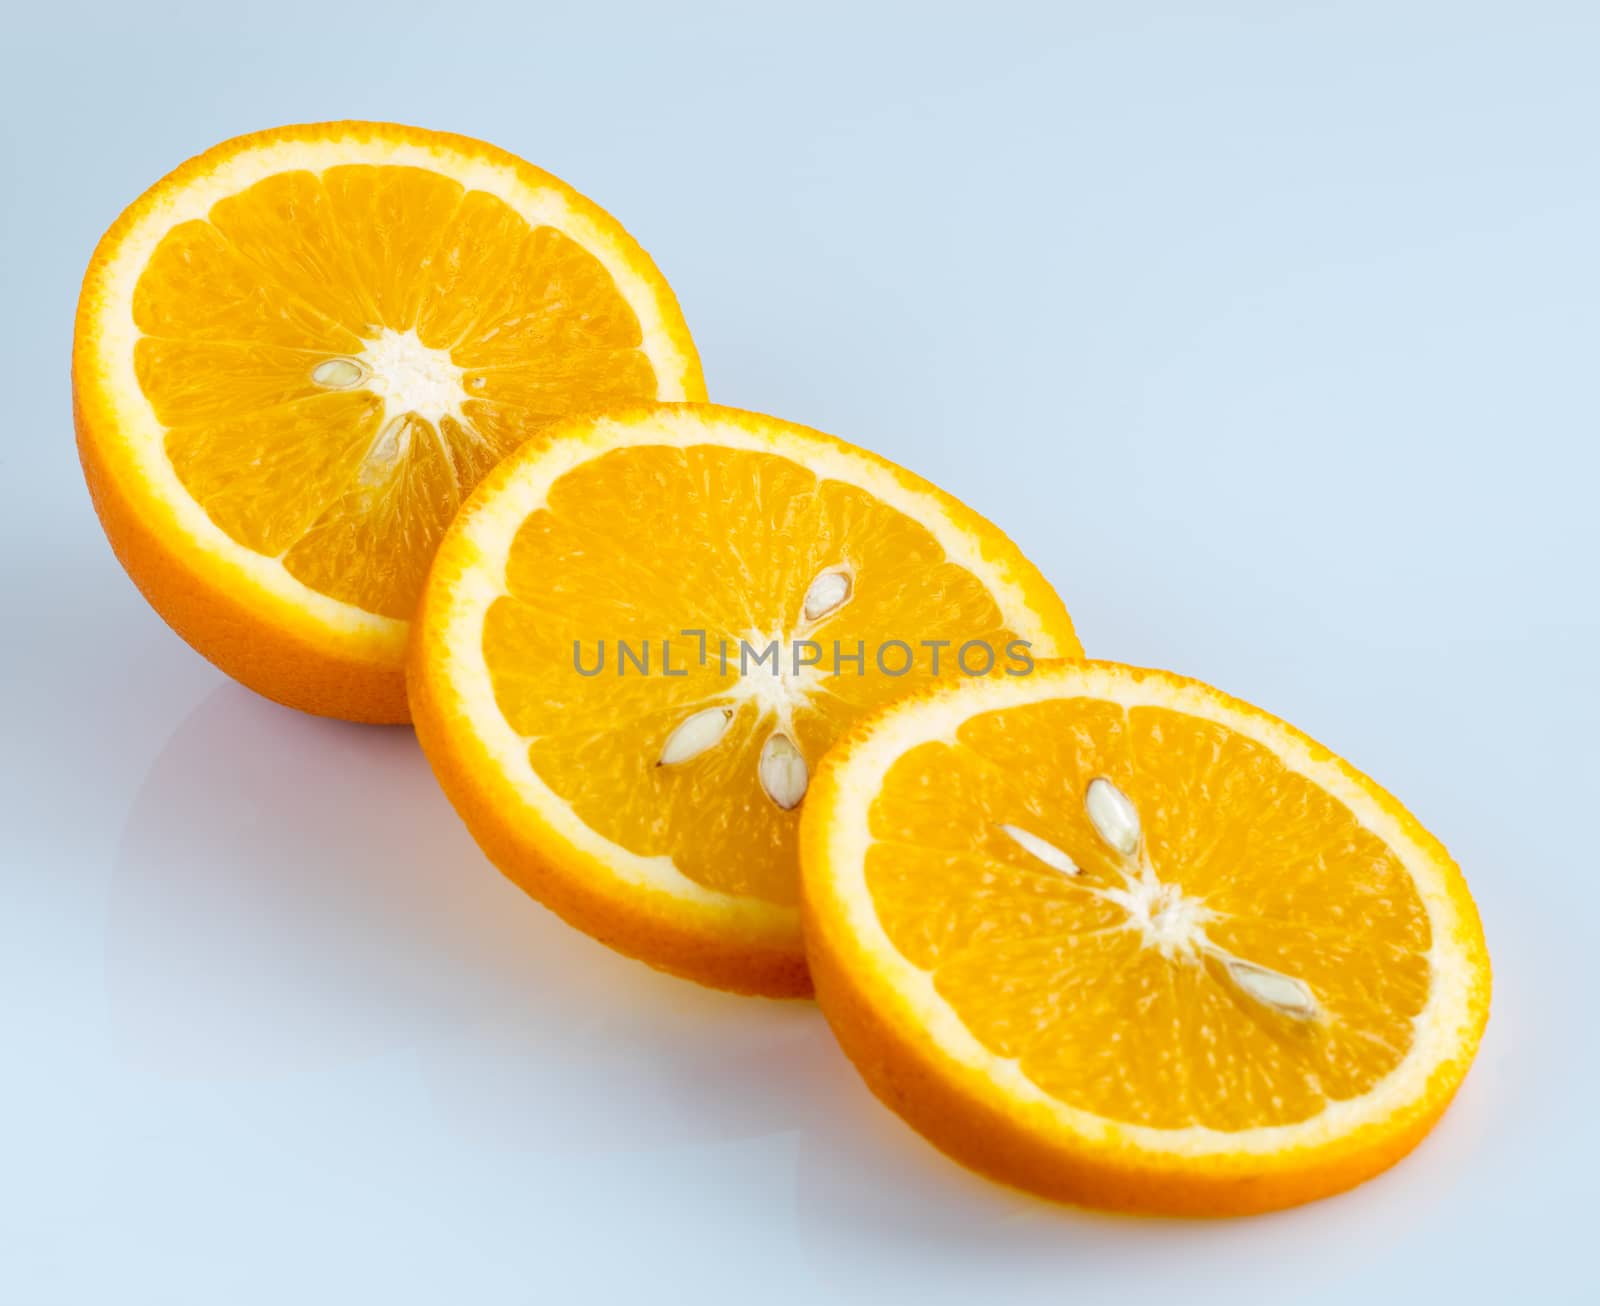 Sliced orange on a light blue background by Sergii